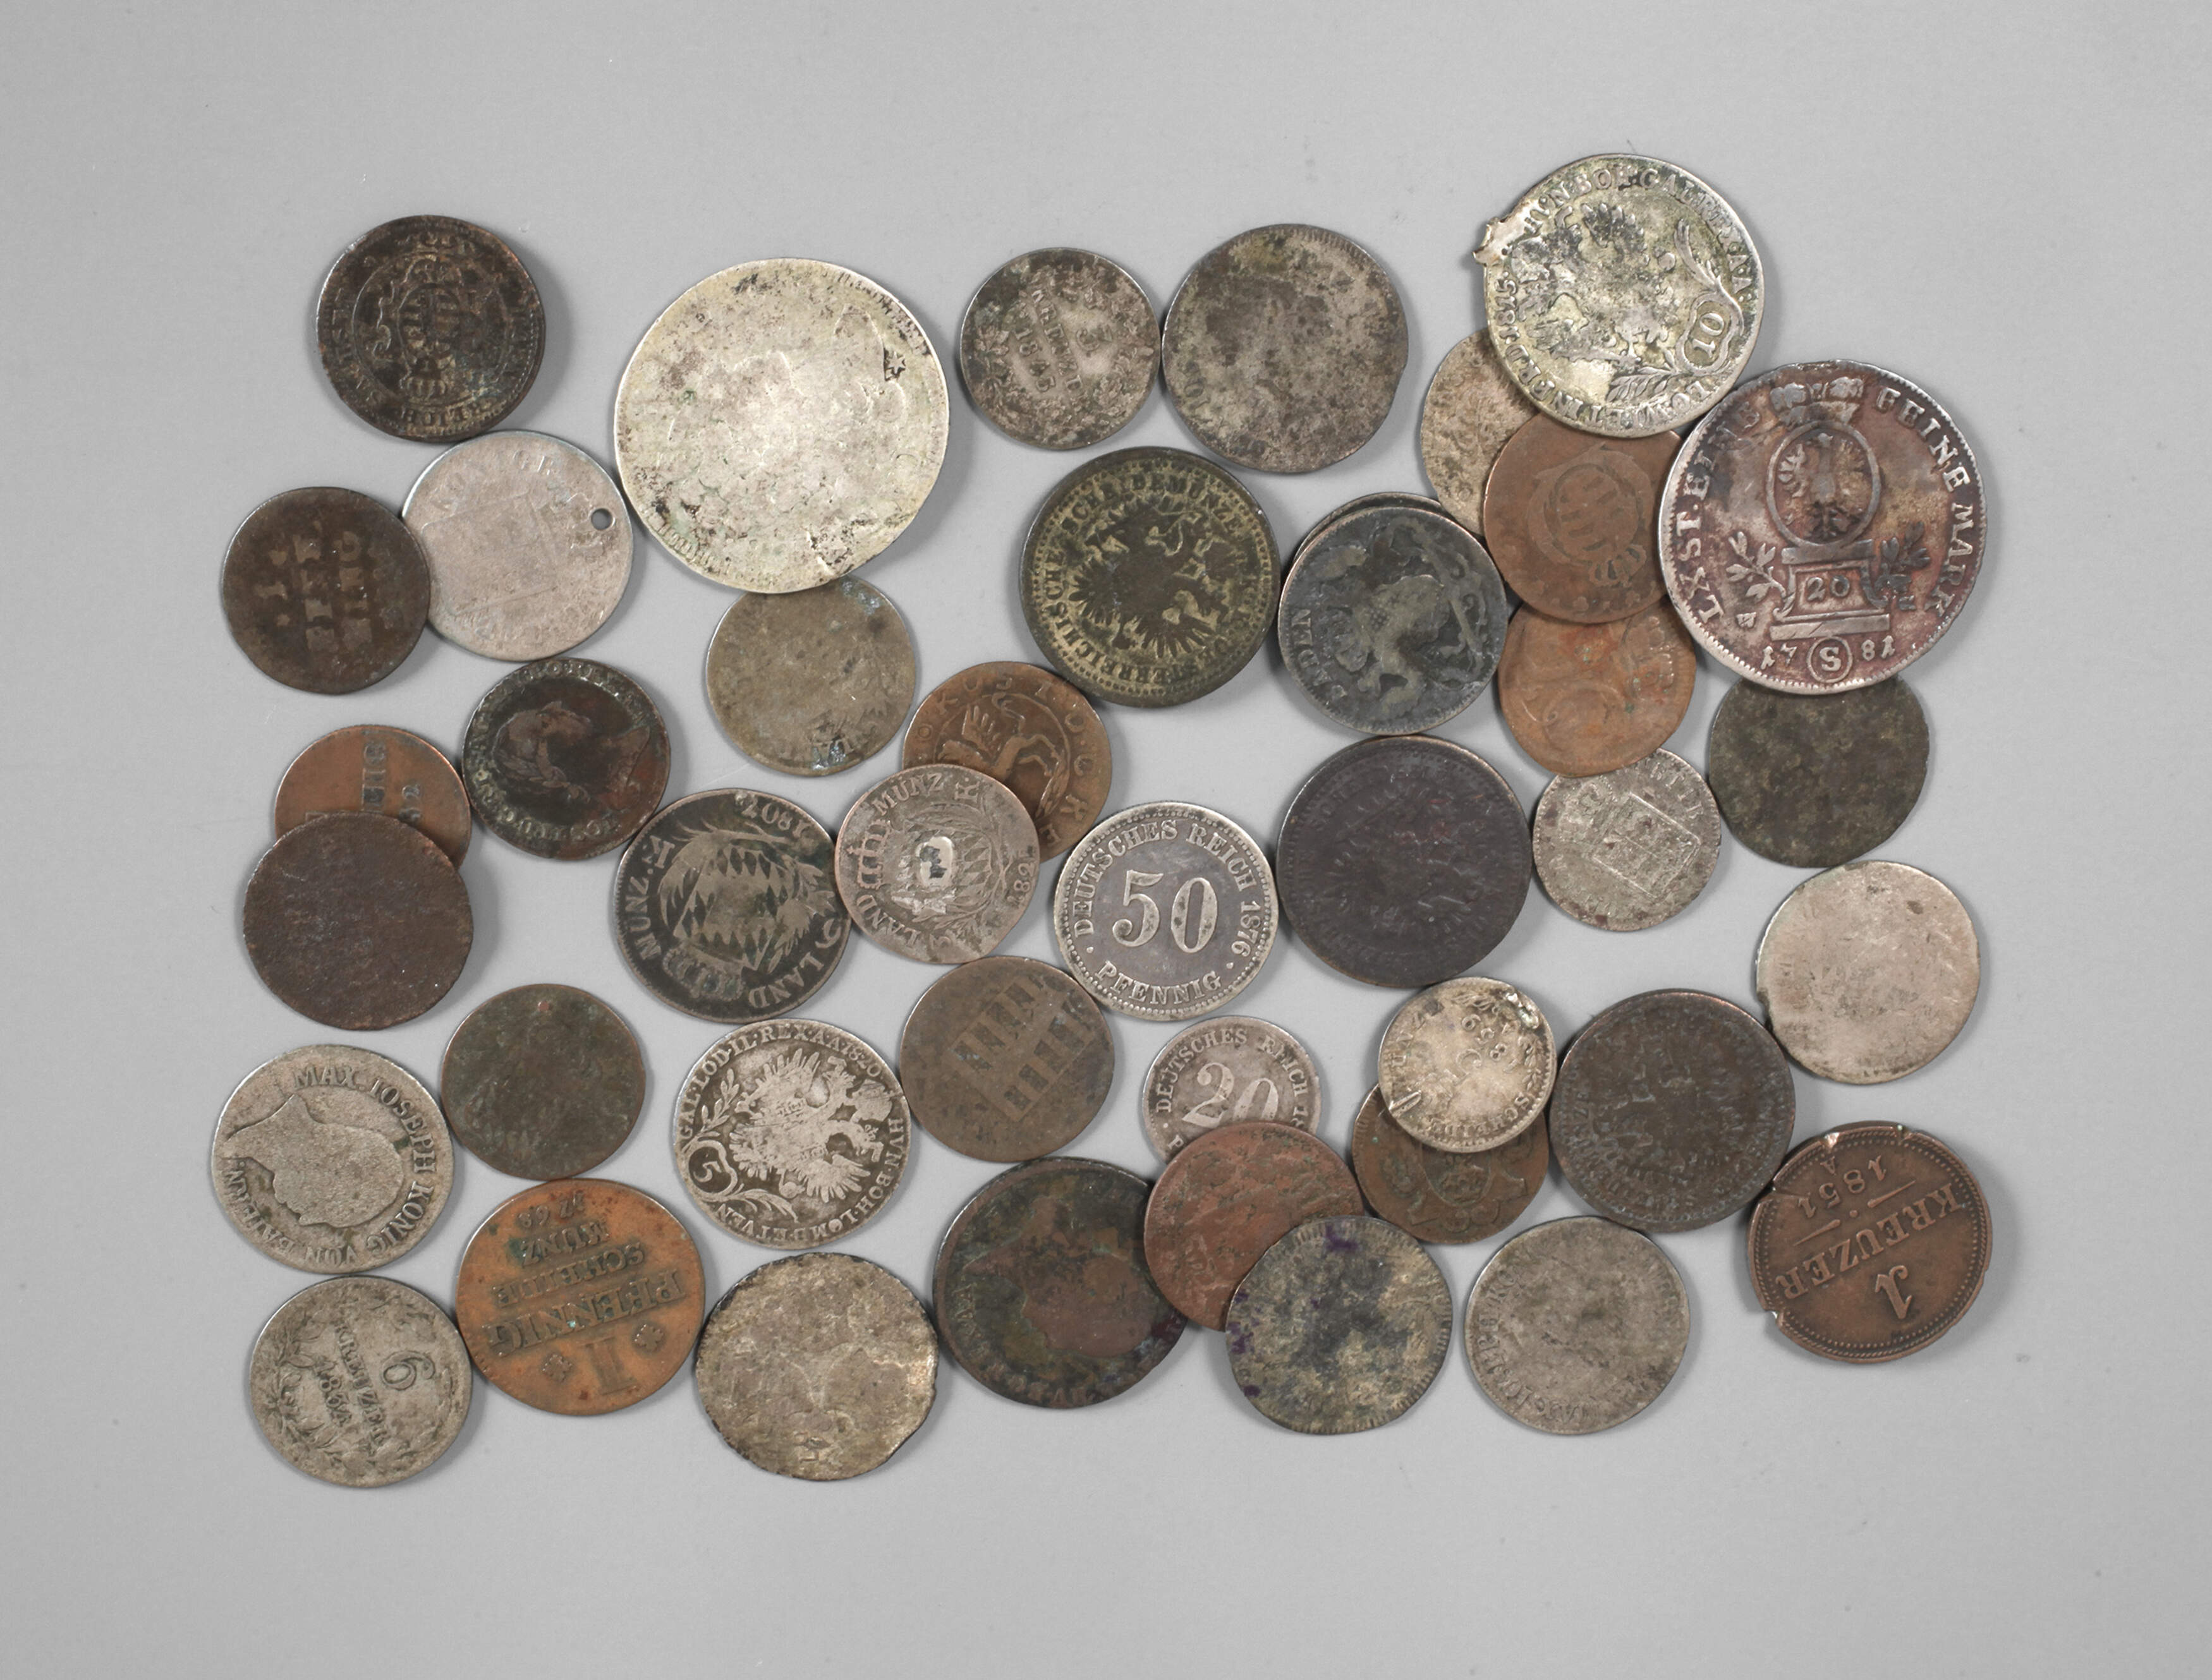 Konvolut Kleinmünzen Altdeutschland